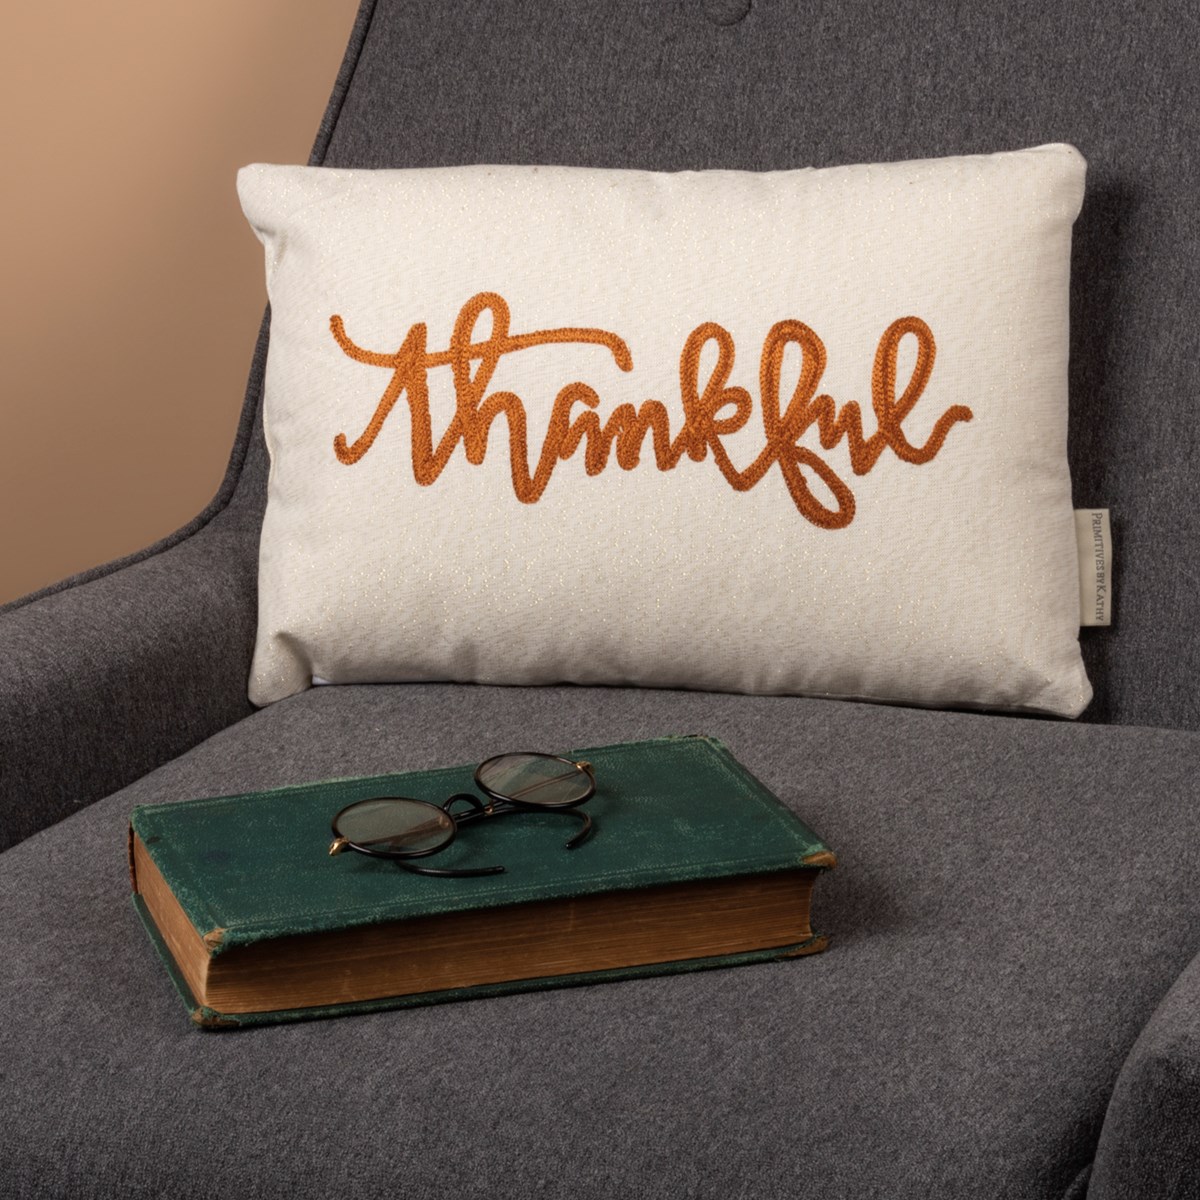 Thankful Embroidered Pillow - Cotton, Zipper